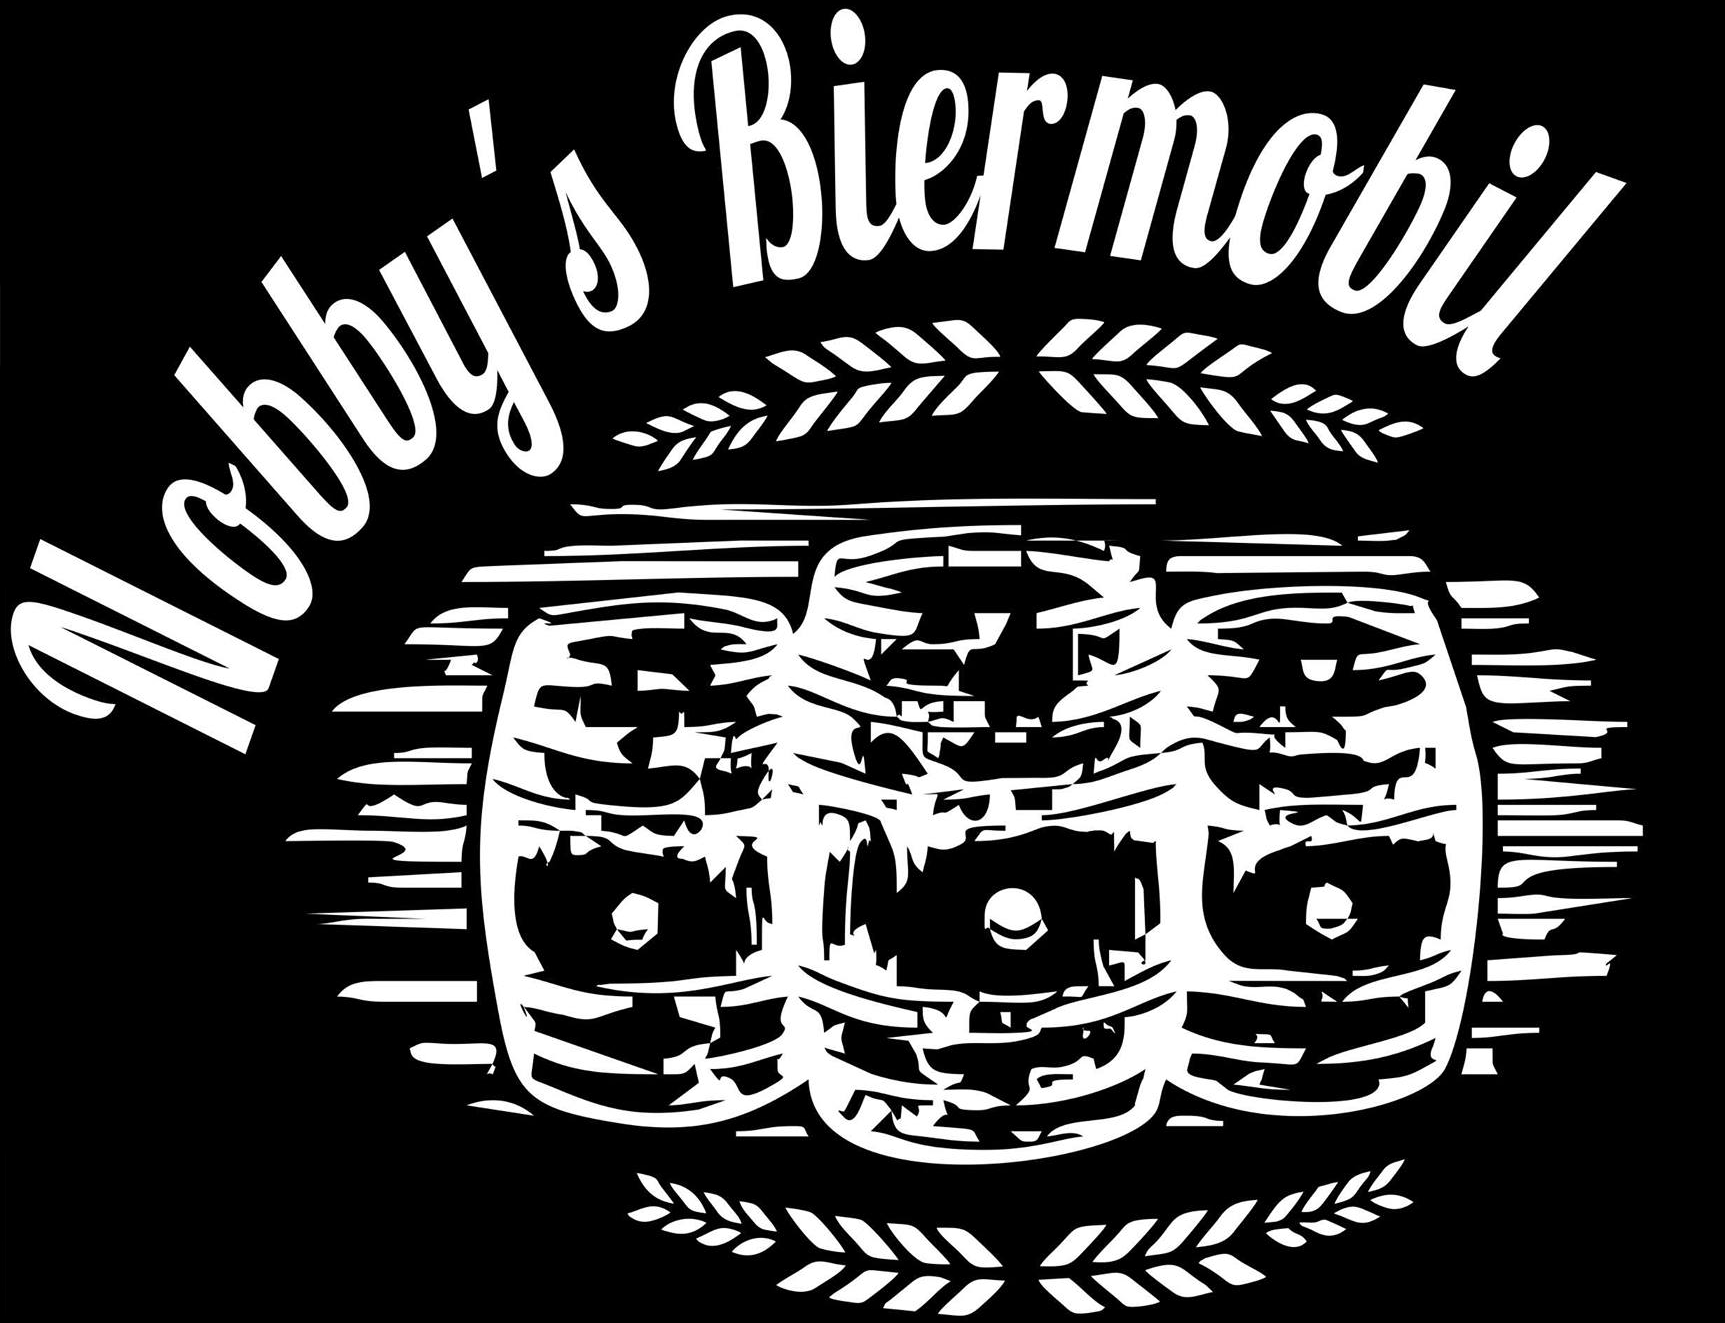 Nobby's Biermobil